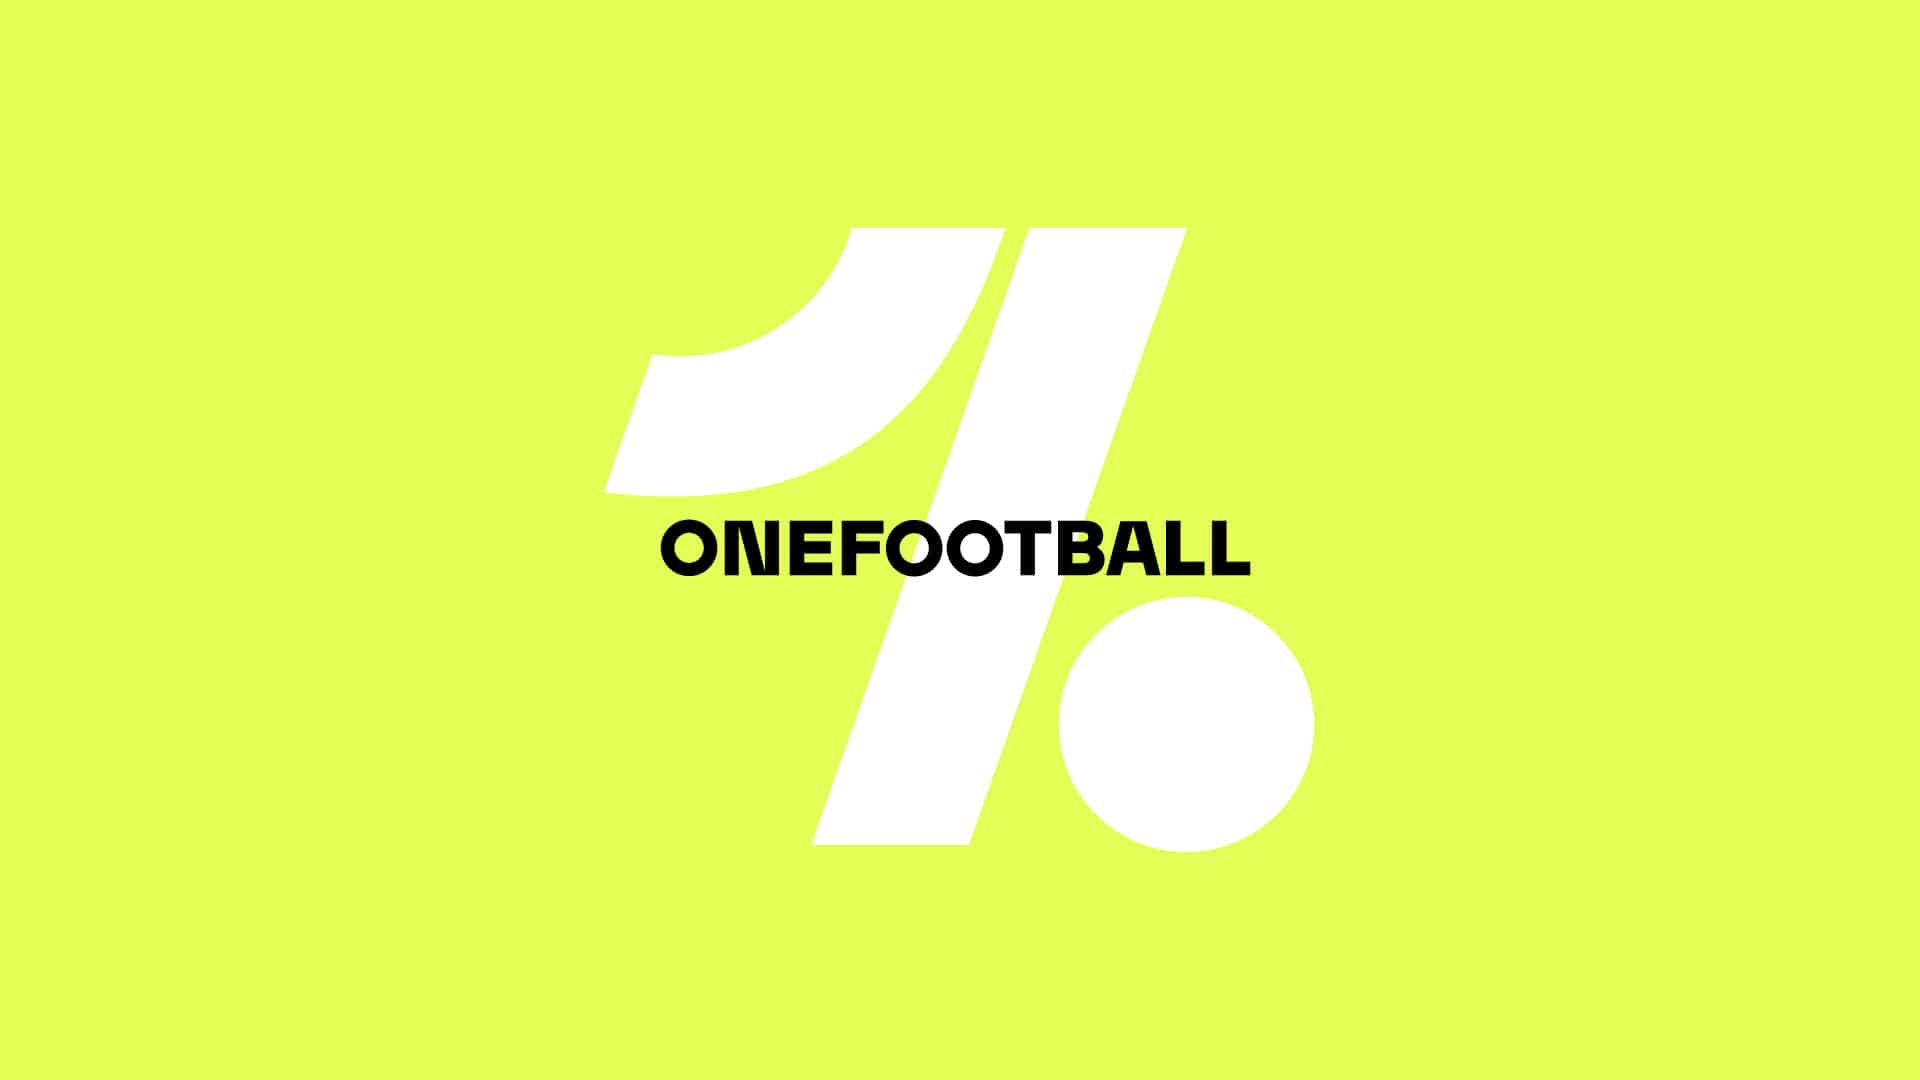 Onefootball_02_Club_Network_AC_Main-0-00-44-09-1